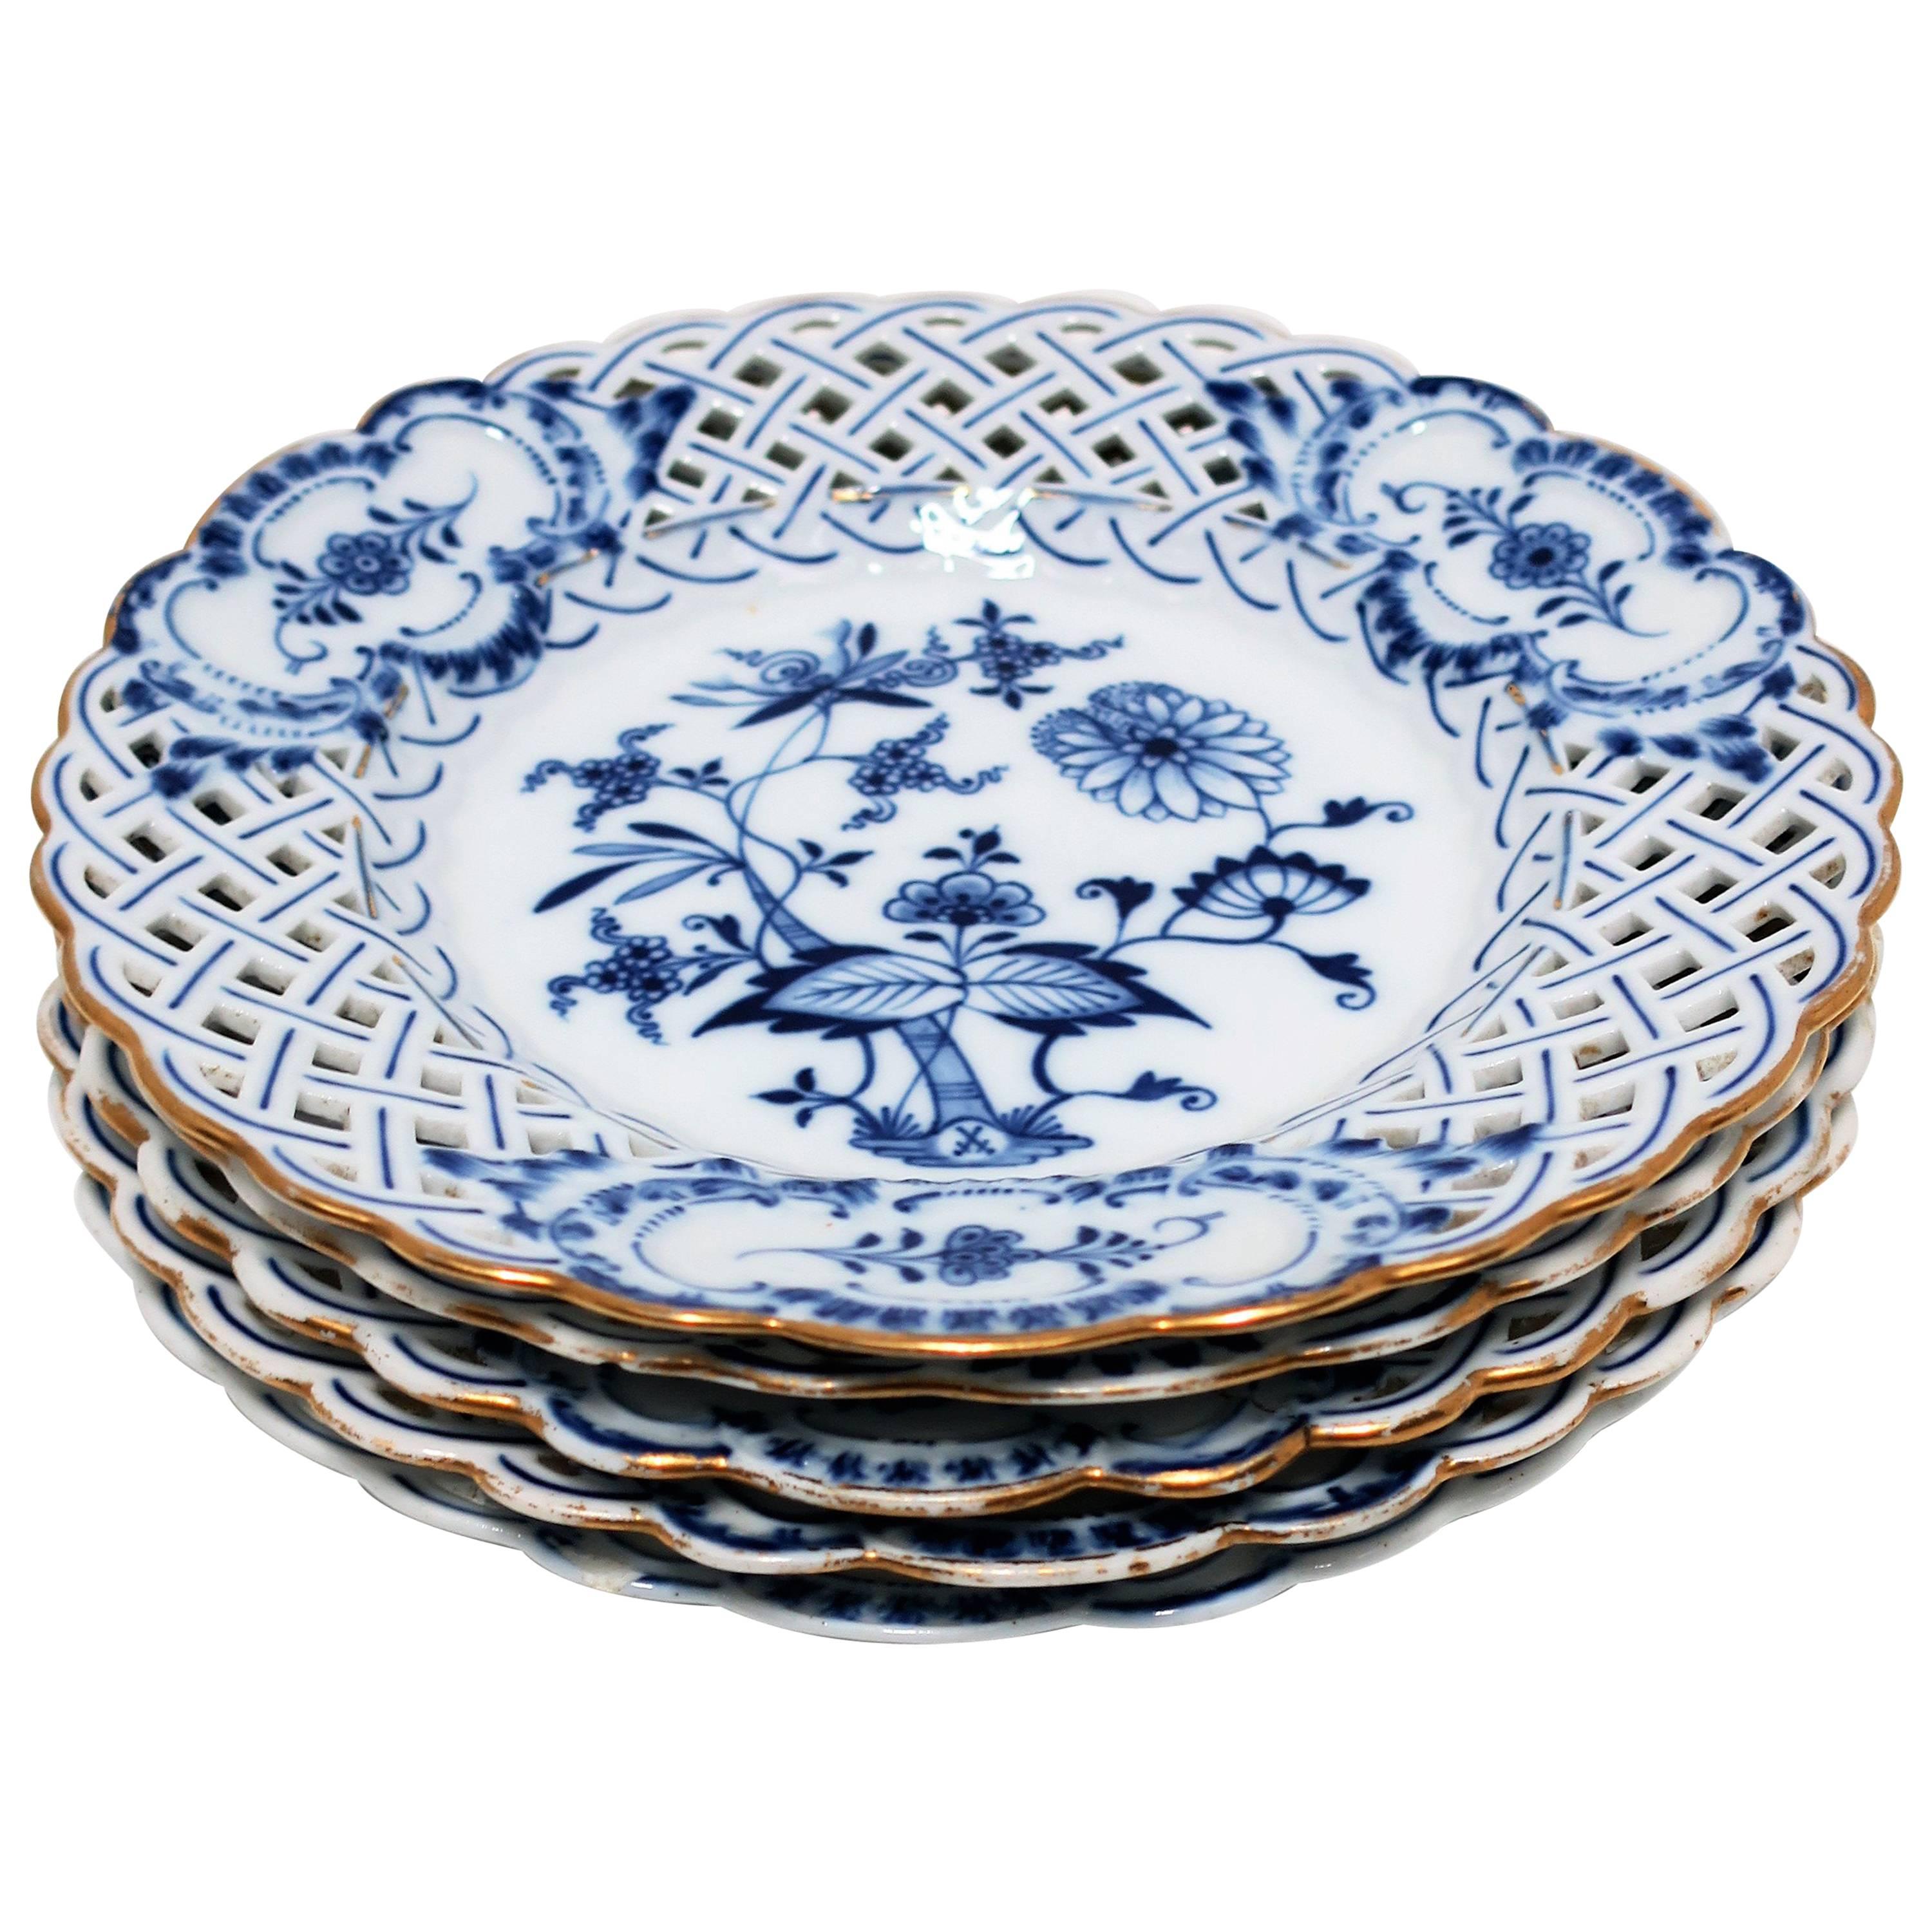 Blue and White Meissen Porcelain Plates